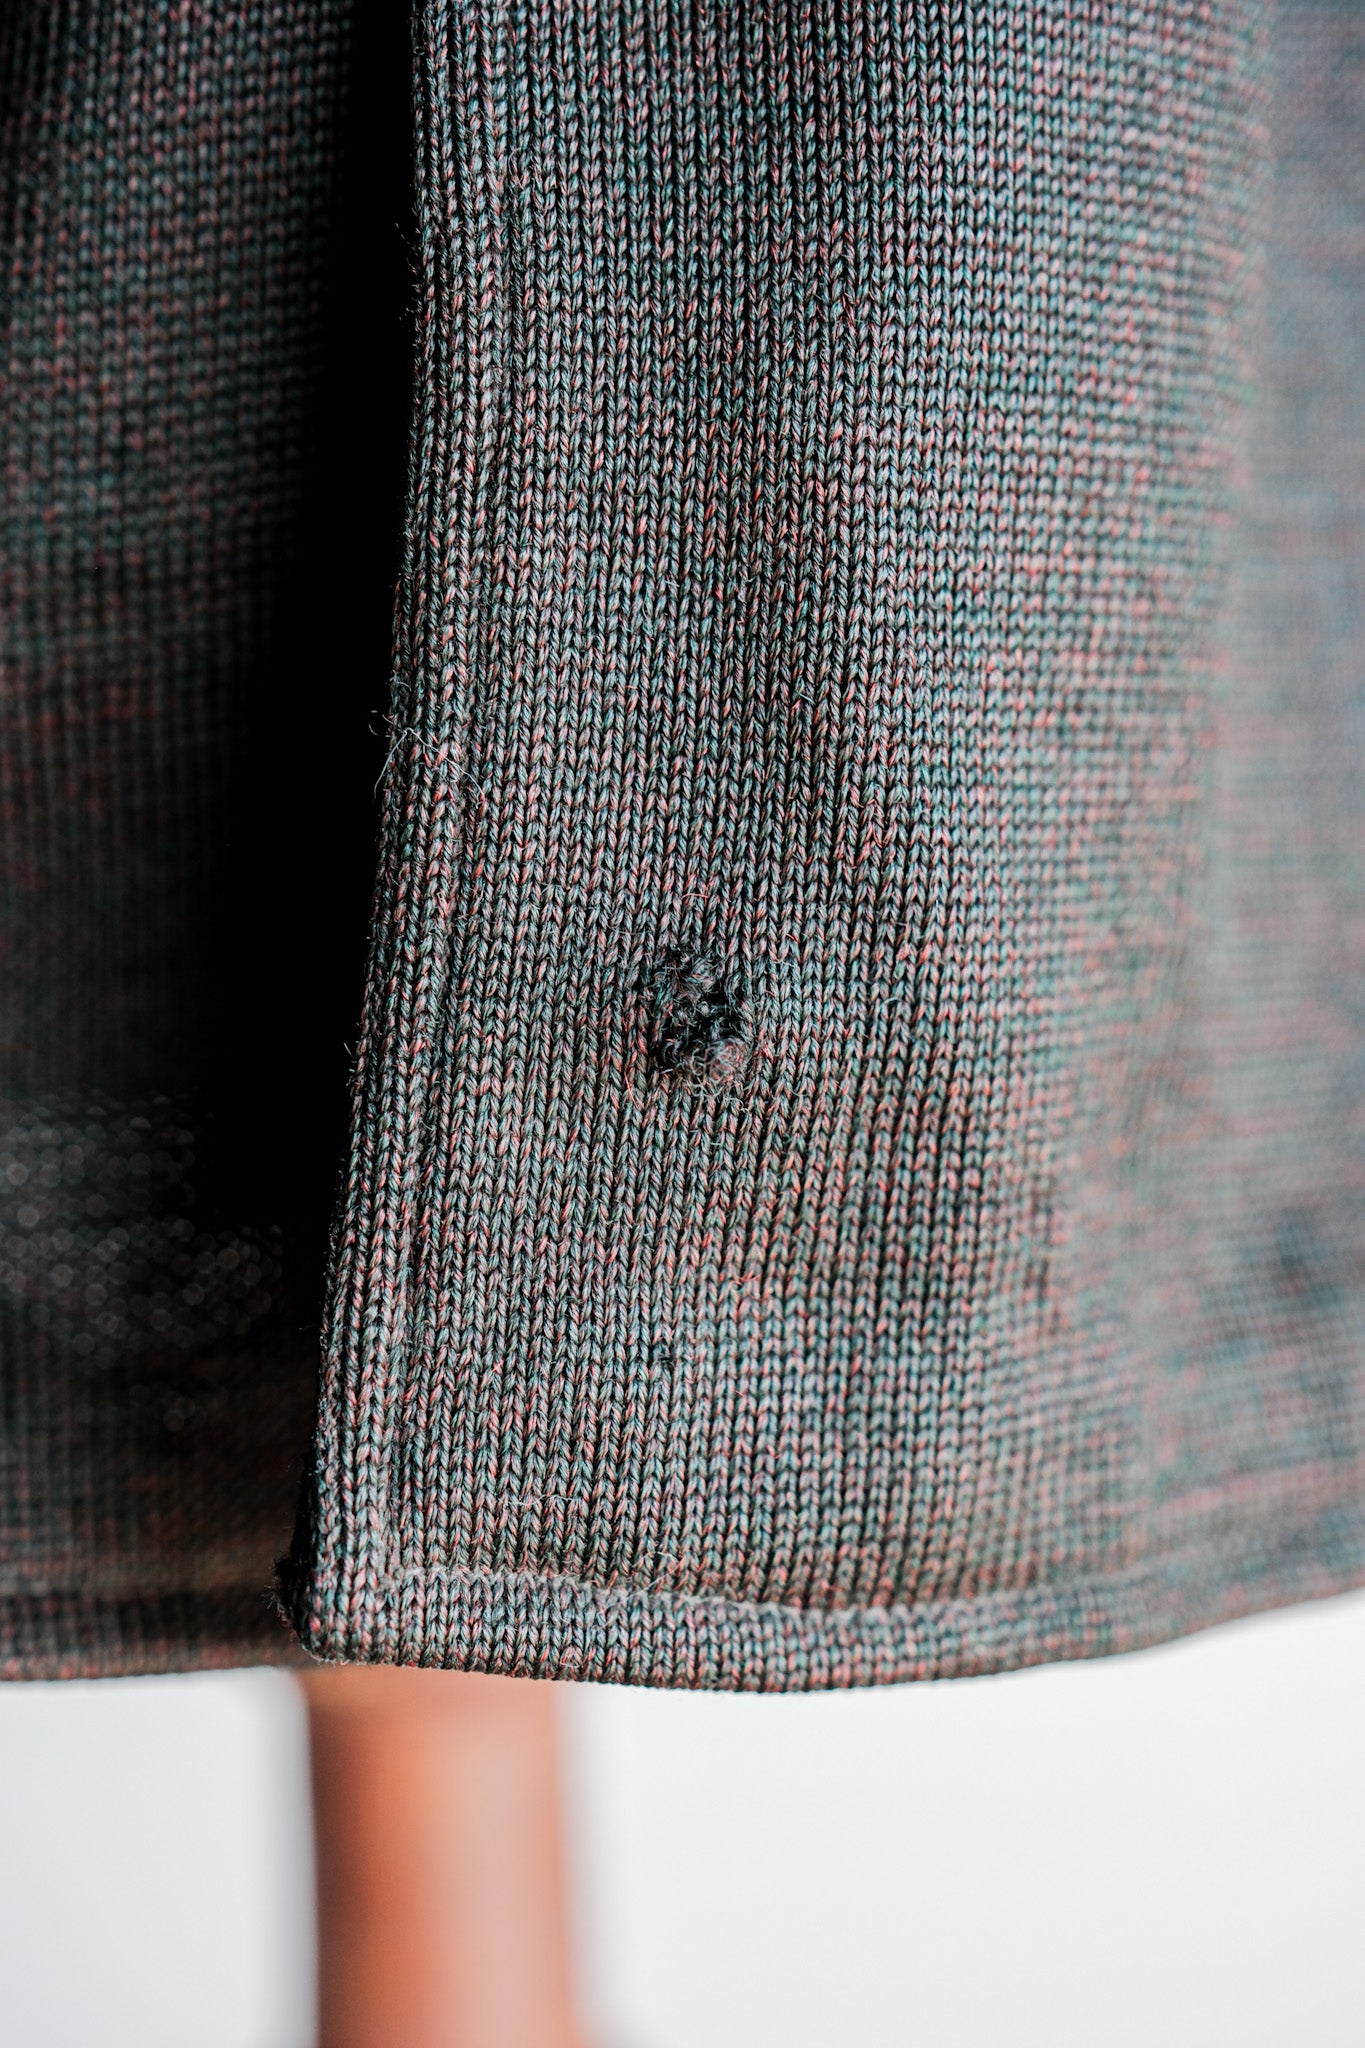 【~30's】Europe Vintage Norfolk Jacket